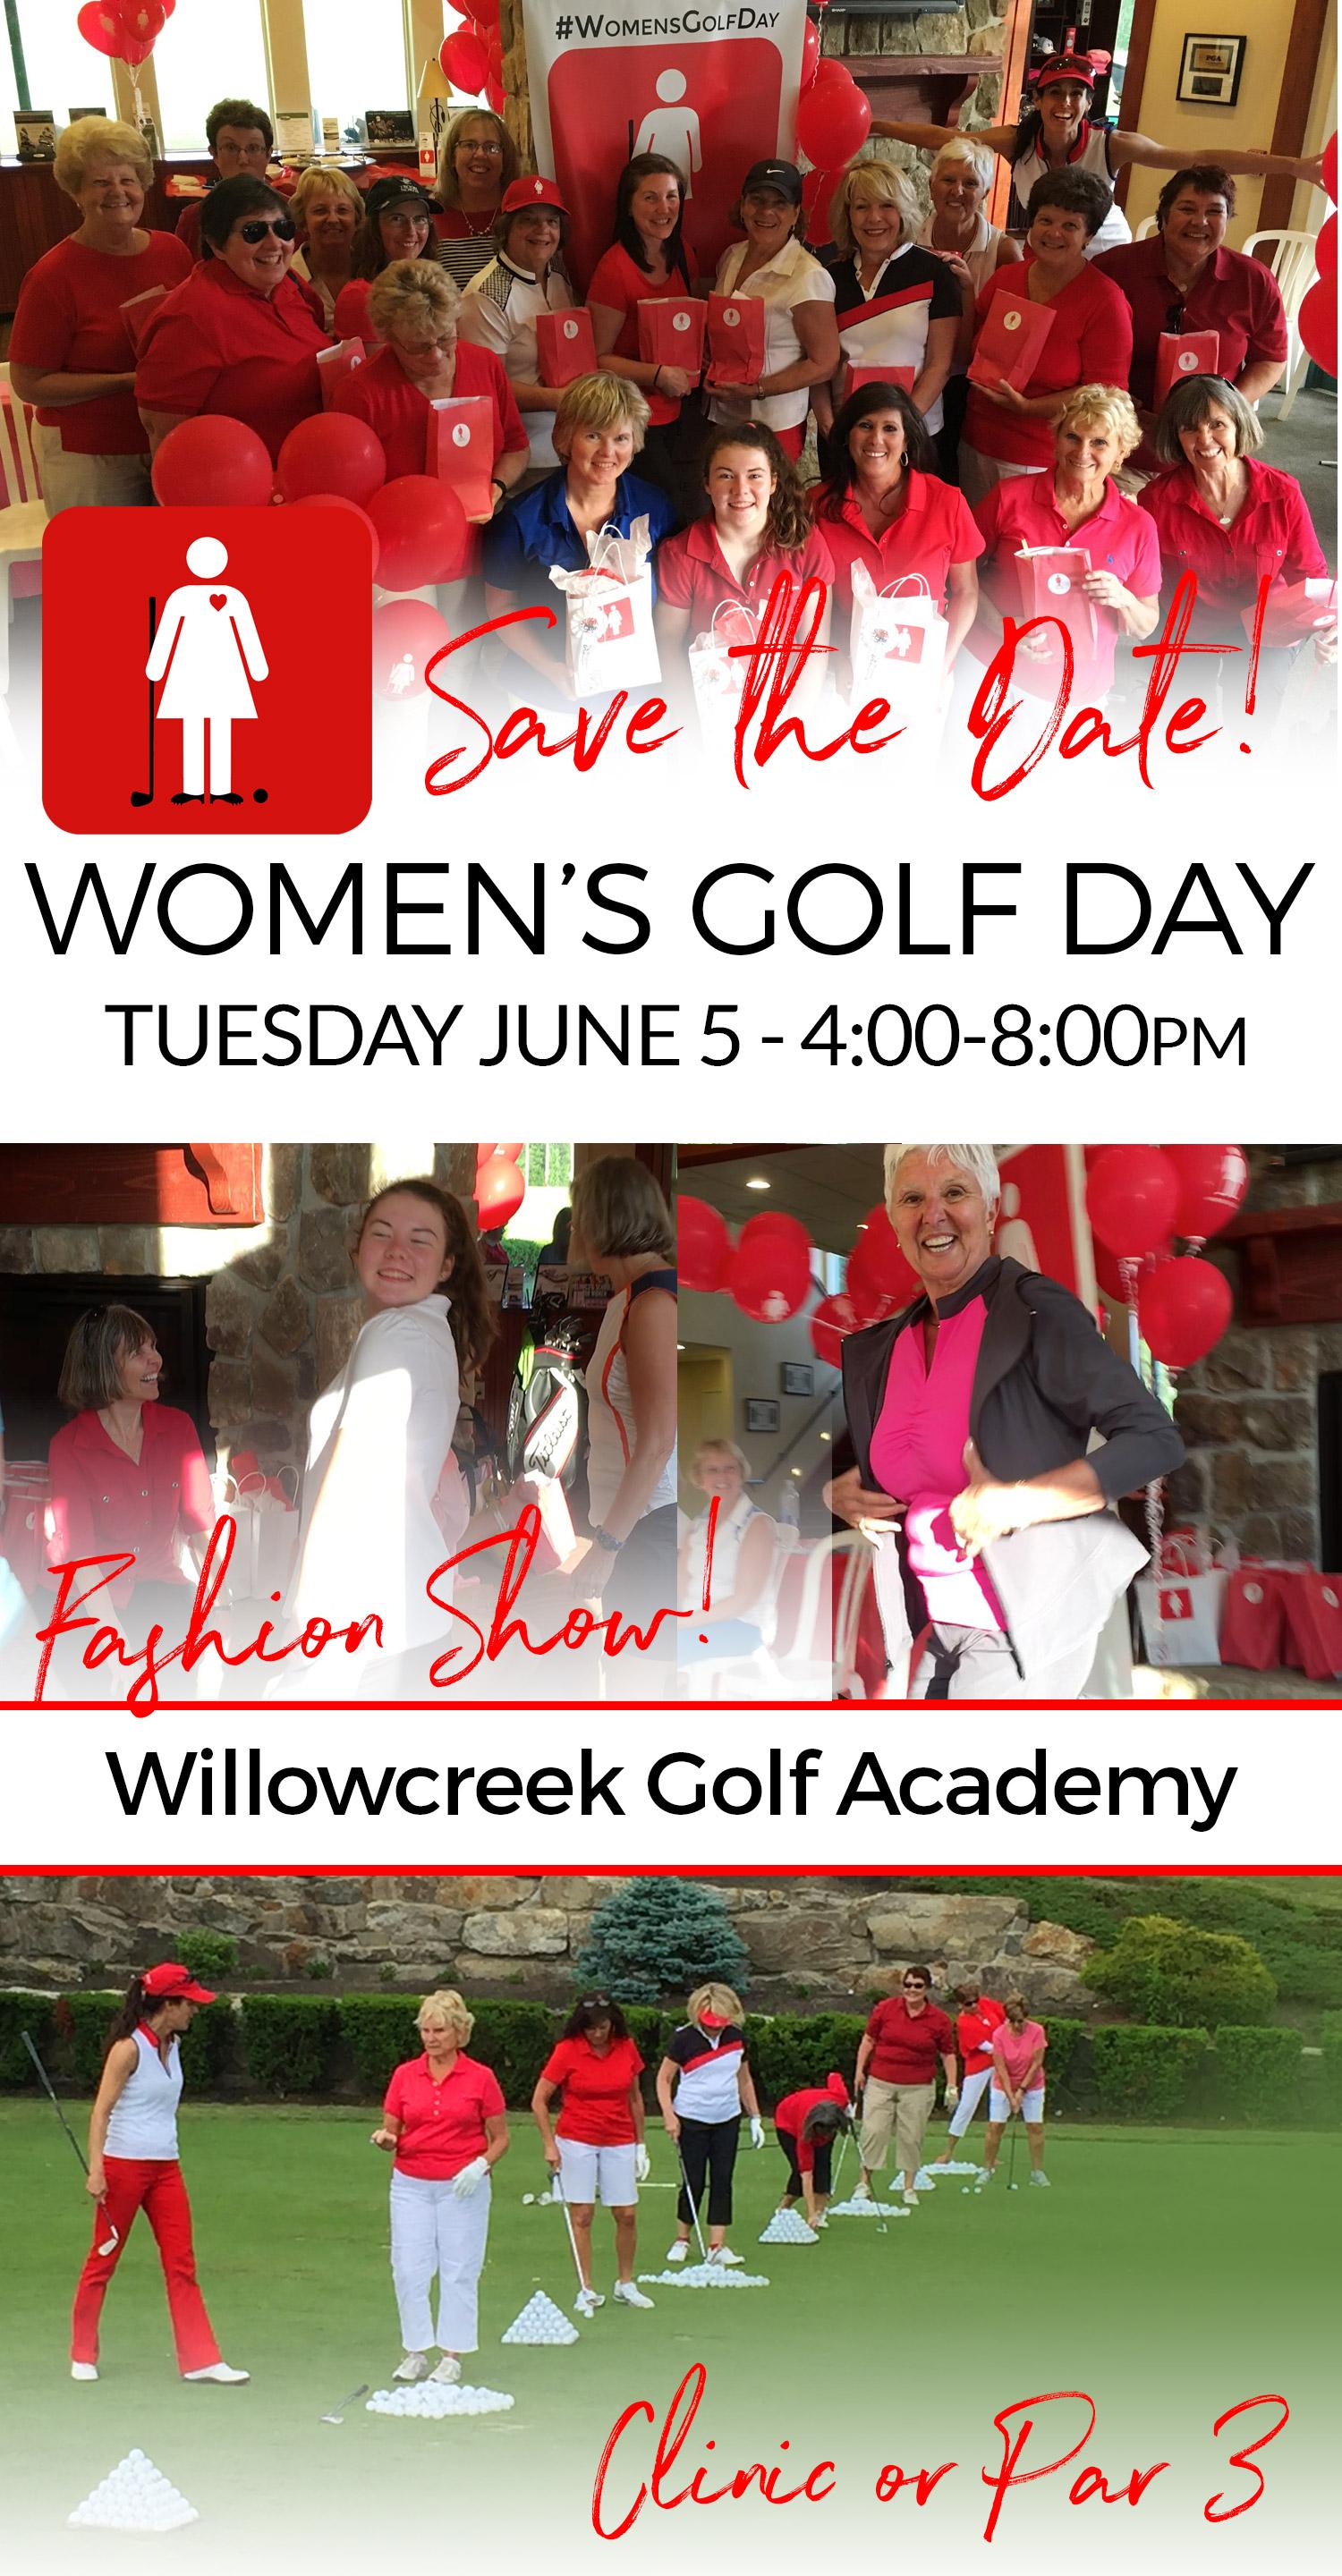 Women's Golf Day at Atkinson Resort